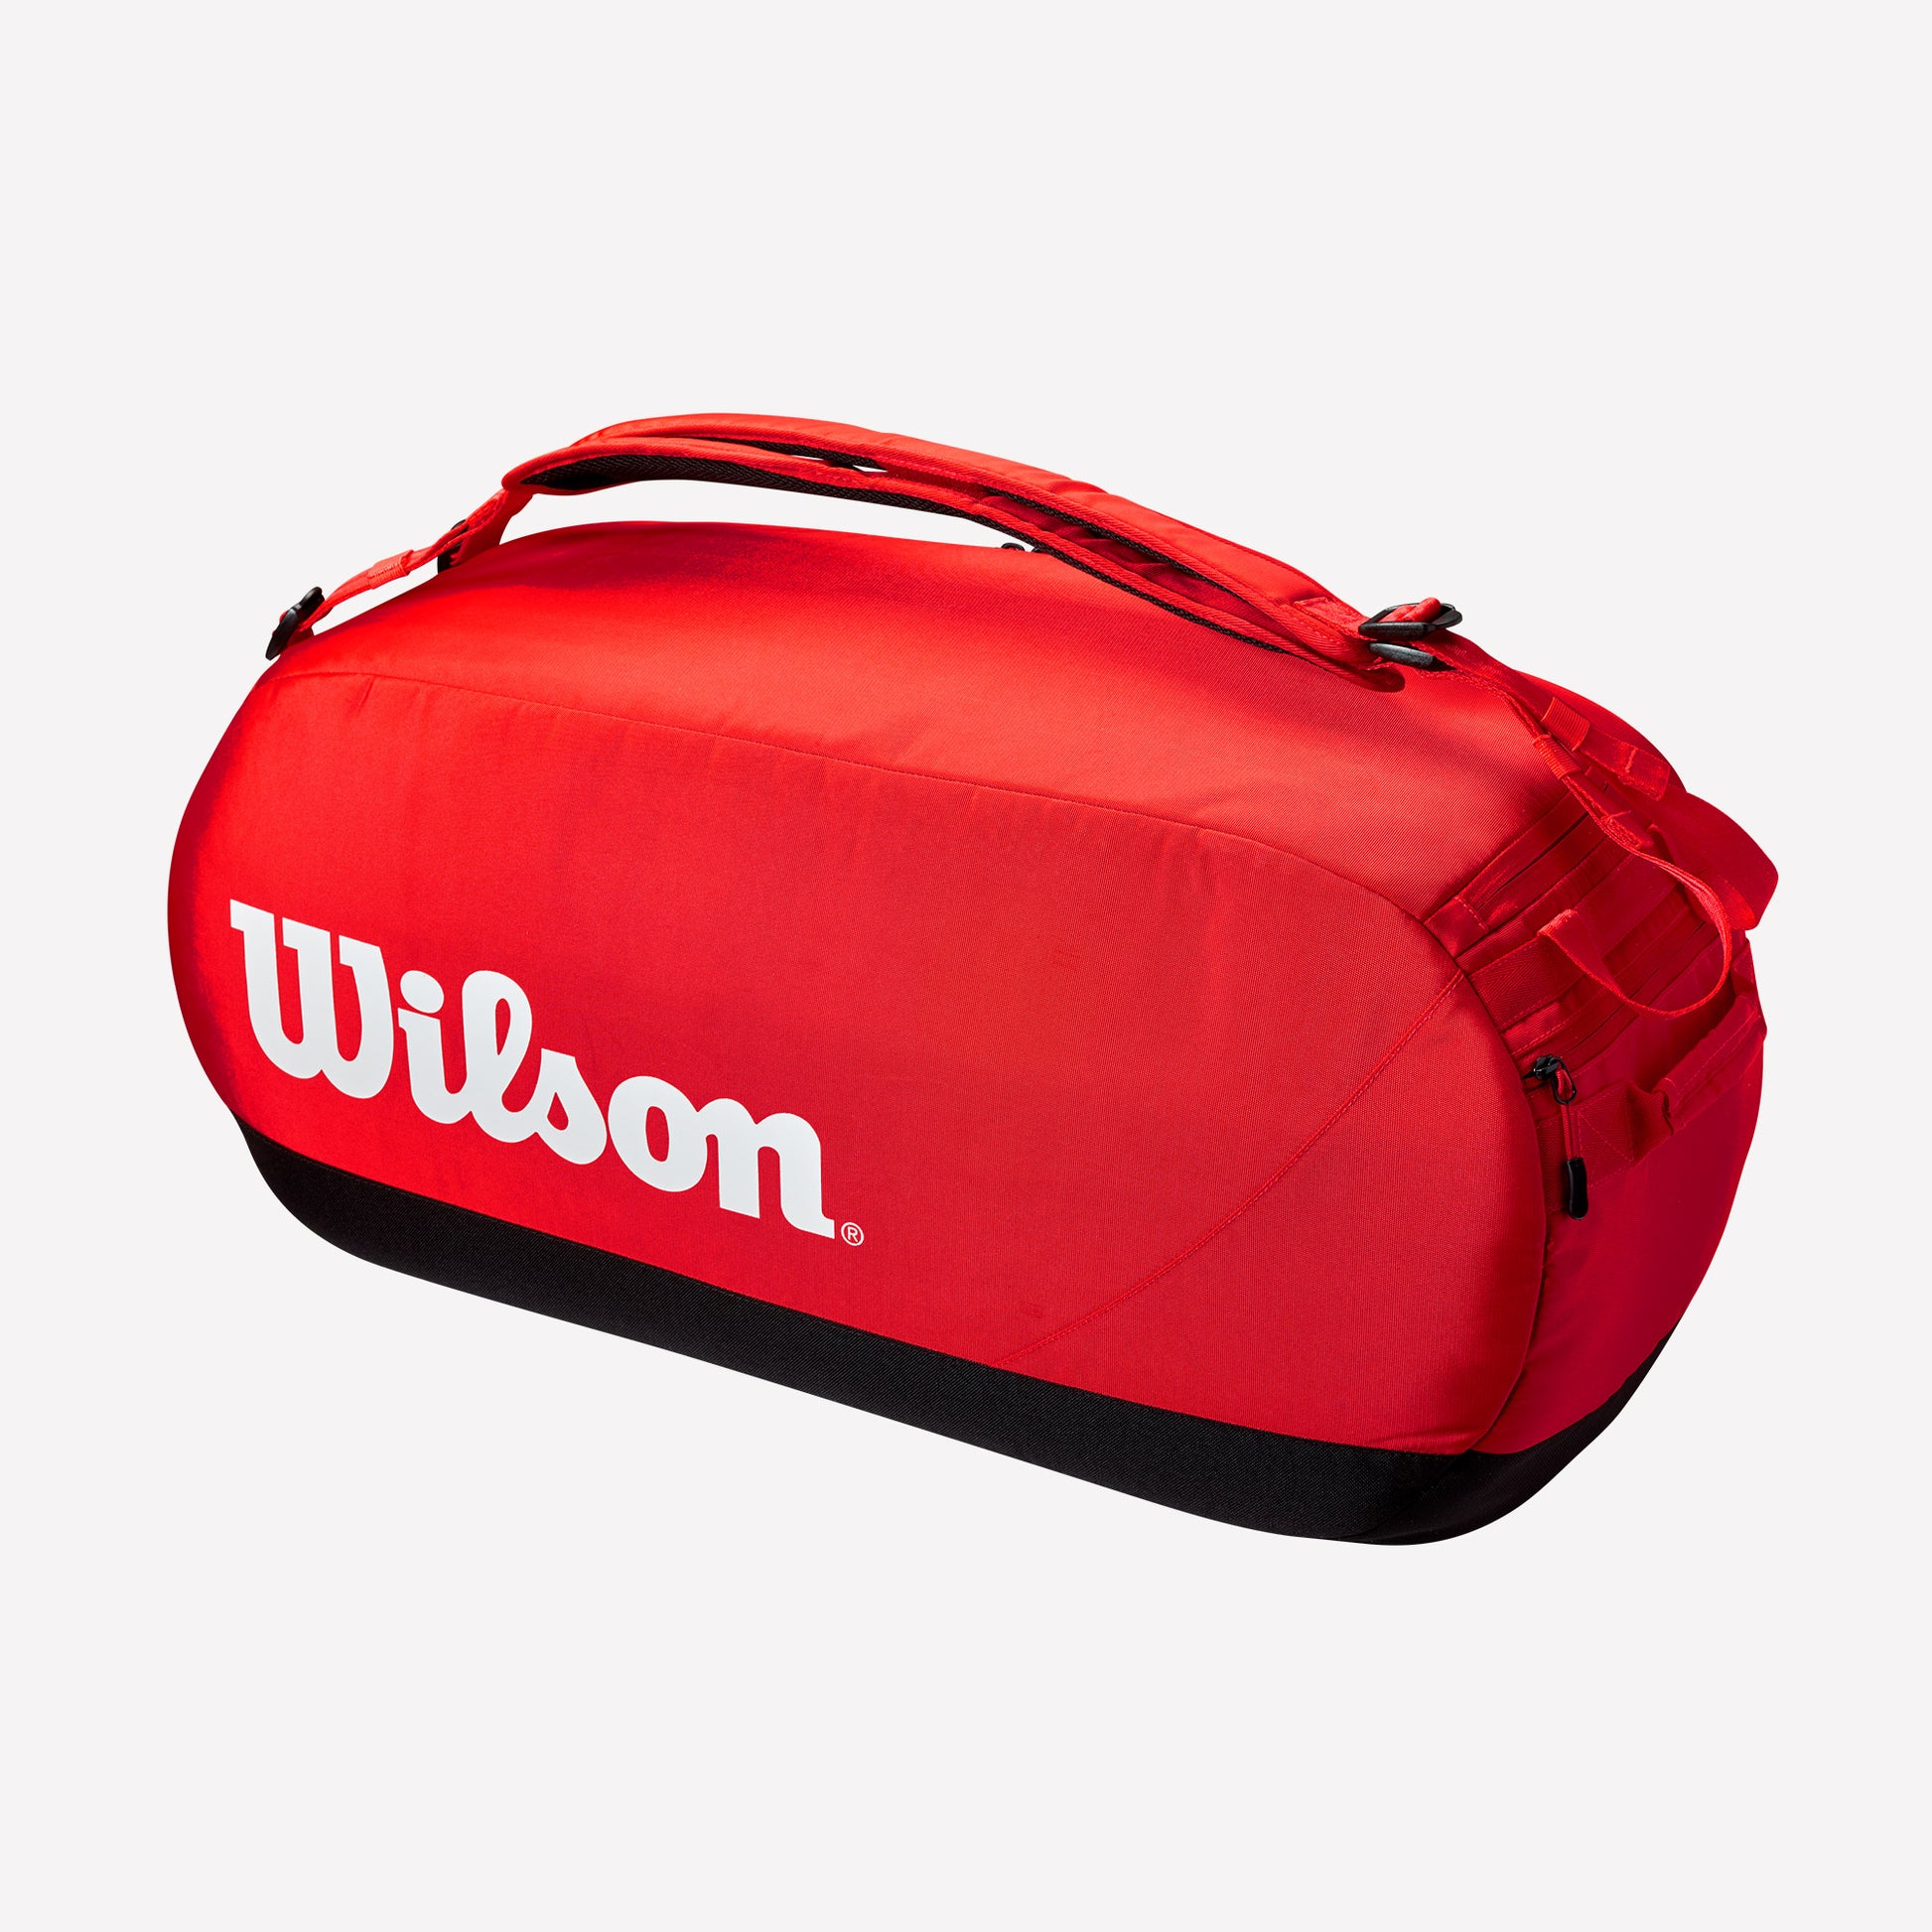 Wilson Super Tour Tennis Duffle Bag Large Red (2)